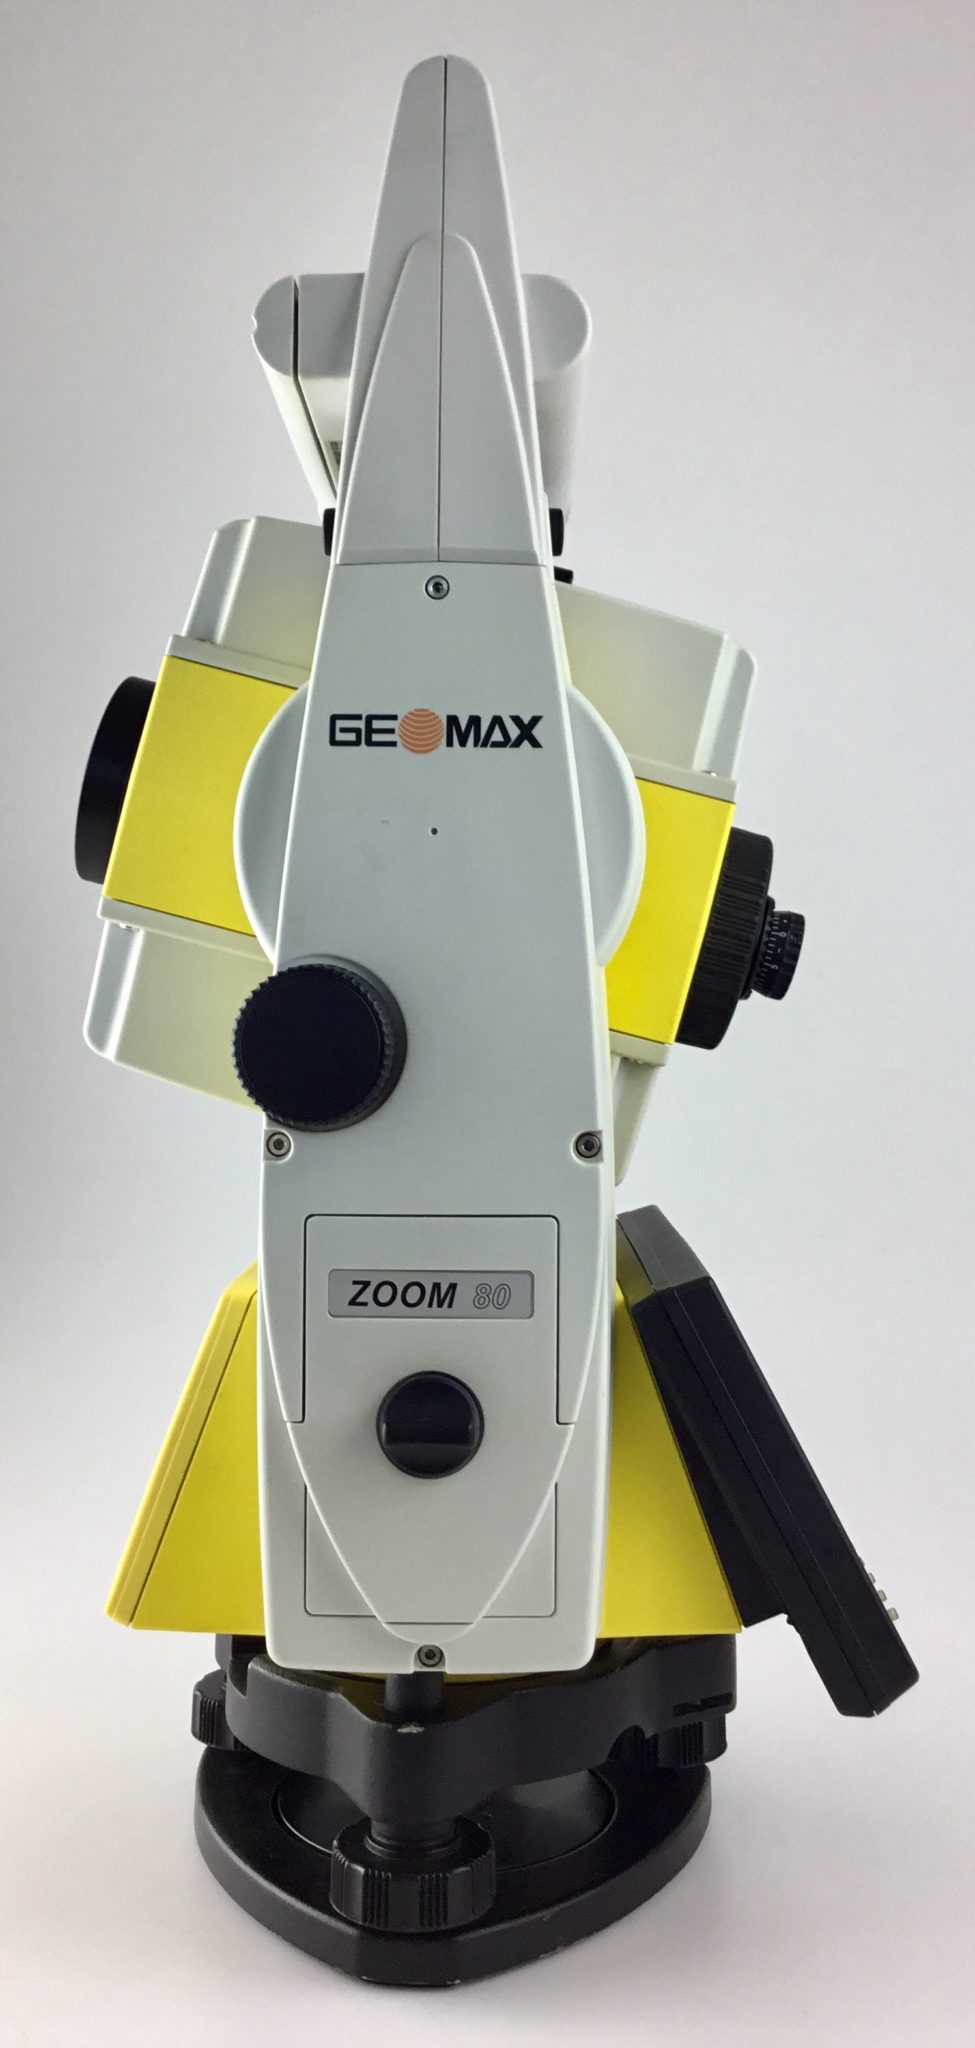 Geomax Zoom80